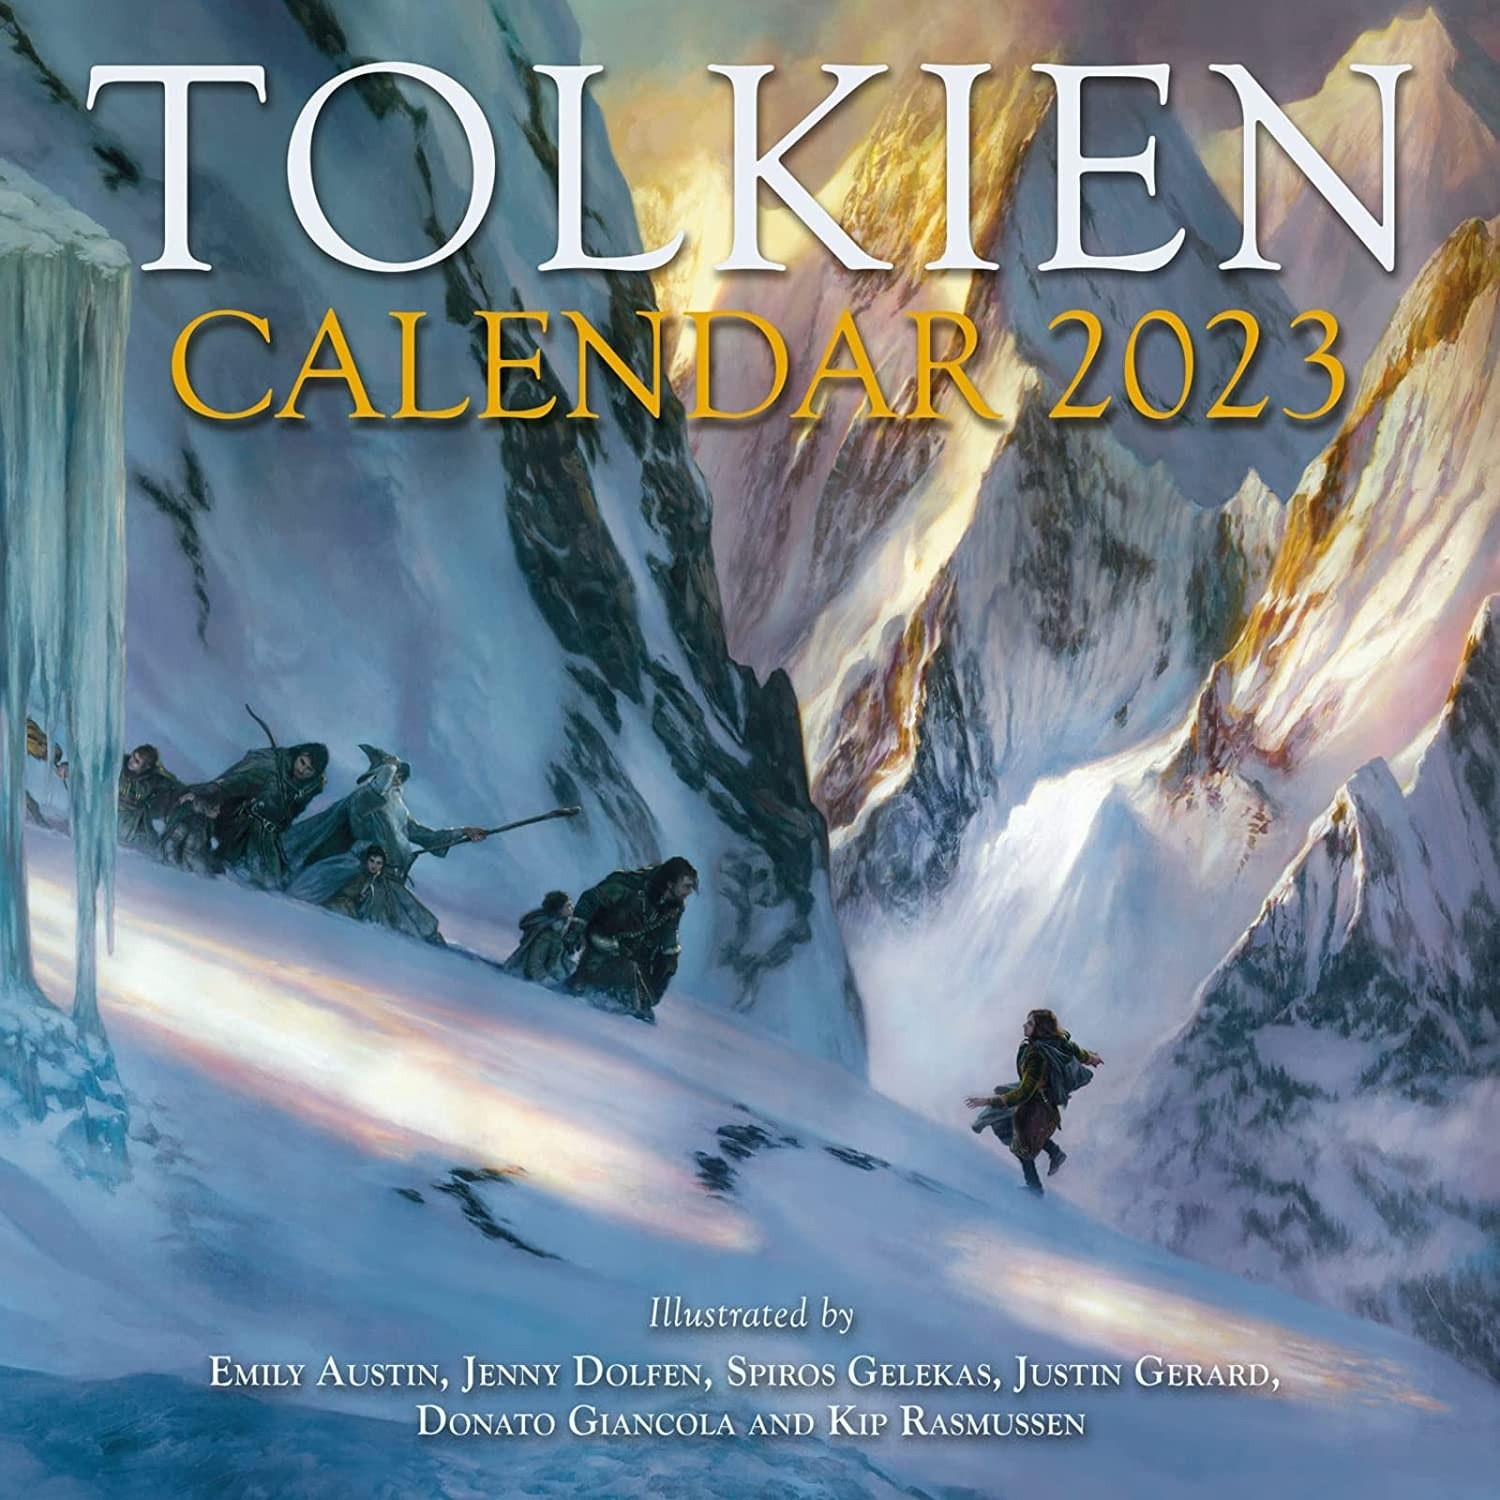 calendario para pared 2023 de Tolkien